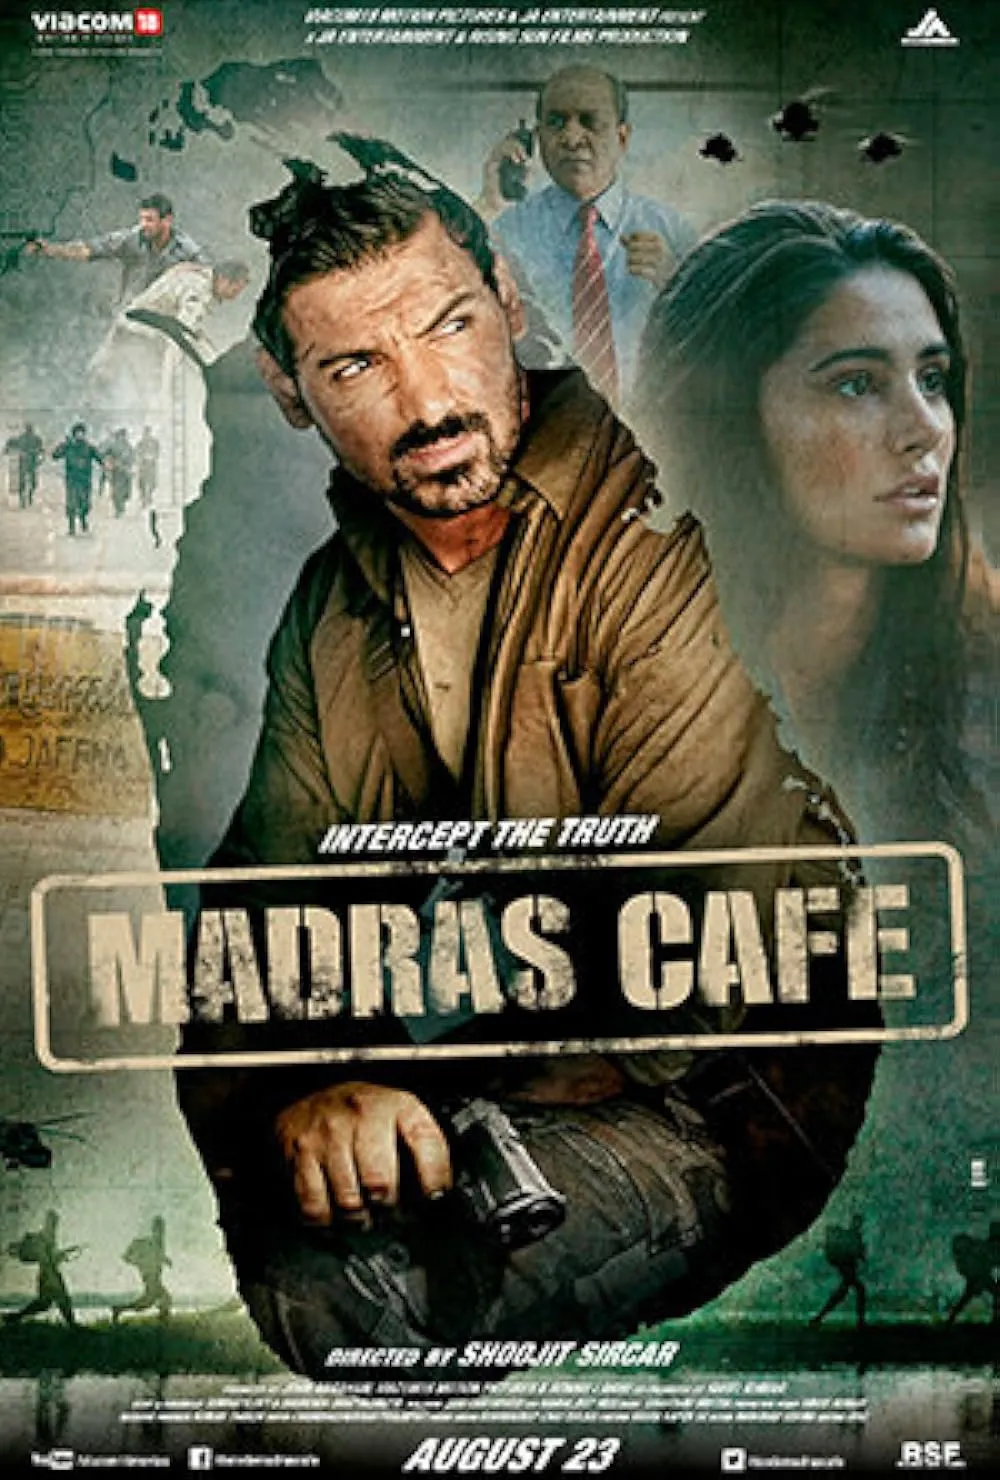 Madras Cafe 2013 Hindi Movie 720p BluRay 1.2GB Download